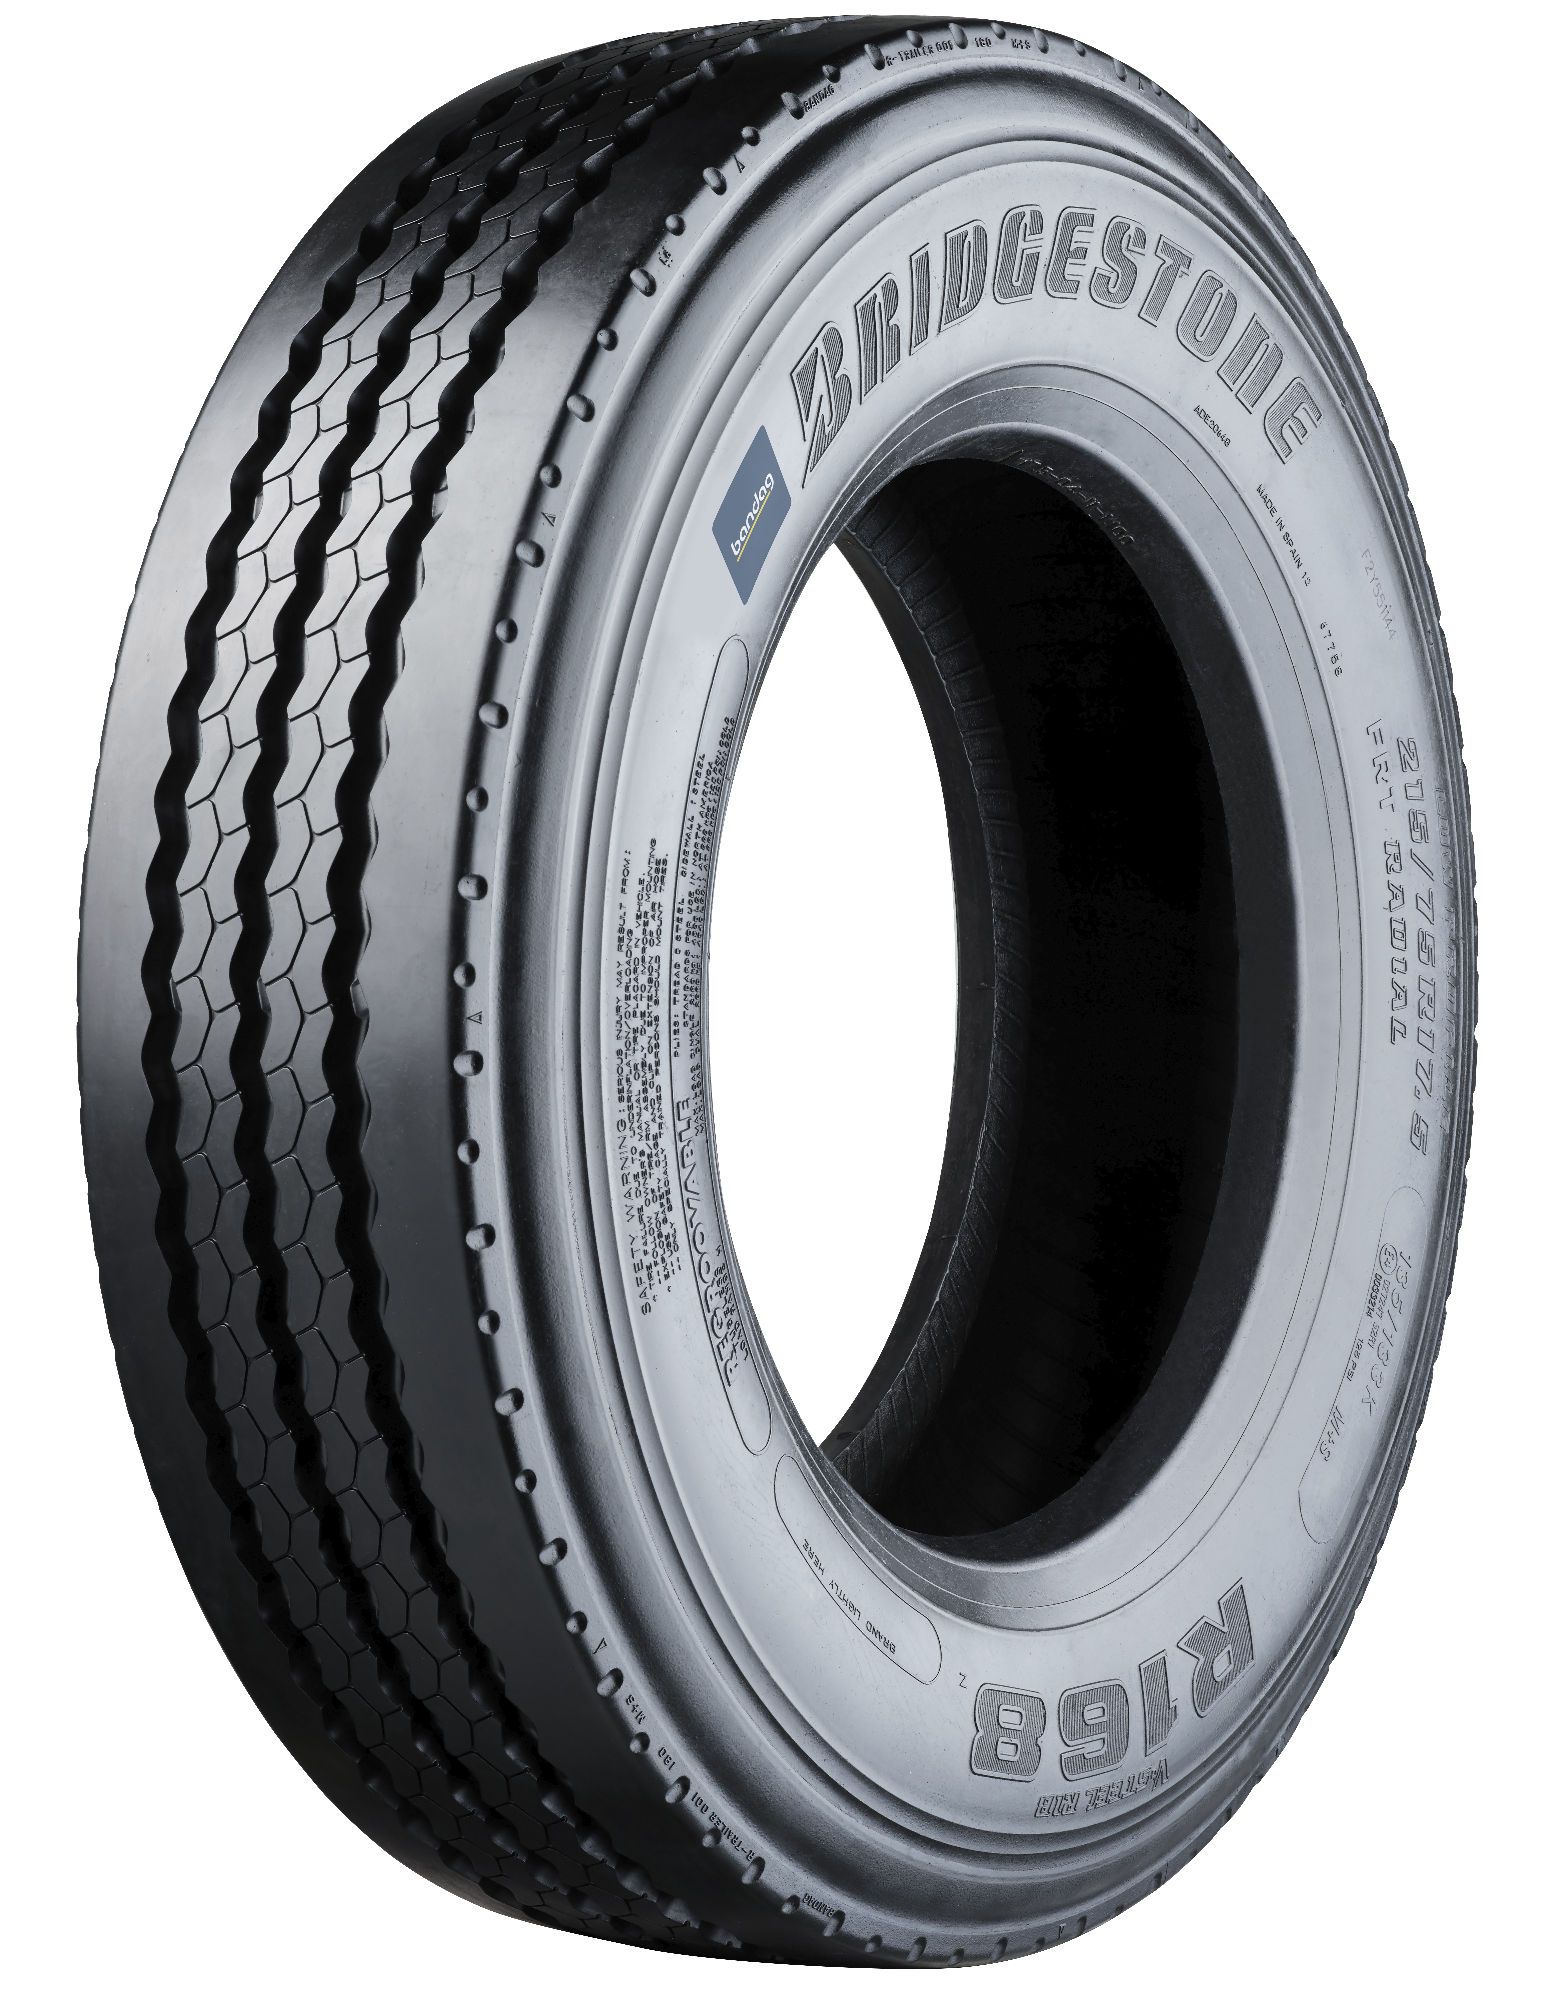 Gomme Nuove Bridgestone 235/75 R17.5 143/141J R-TRAILER 001 M+S (8.00mm) pneumatici nuovi Estivo